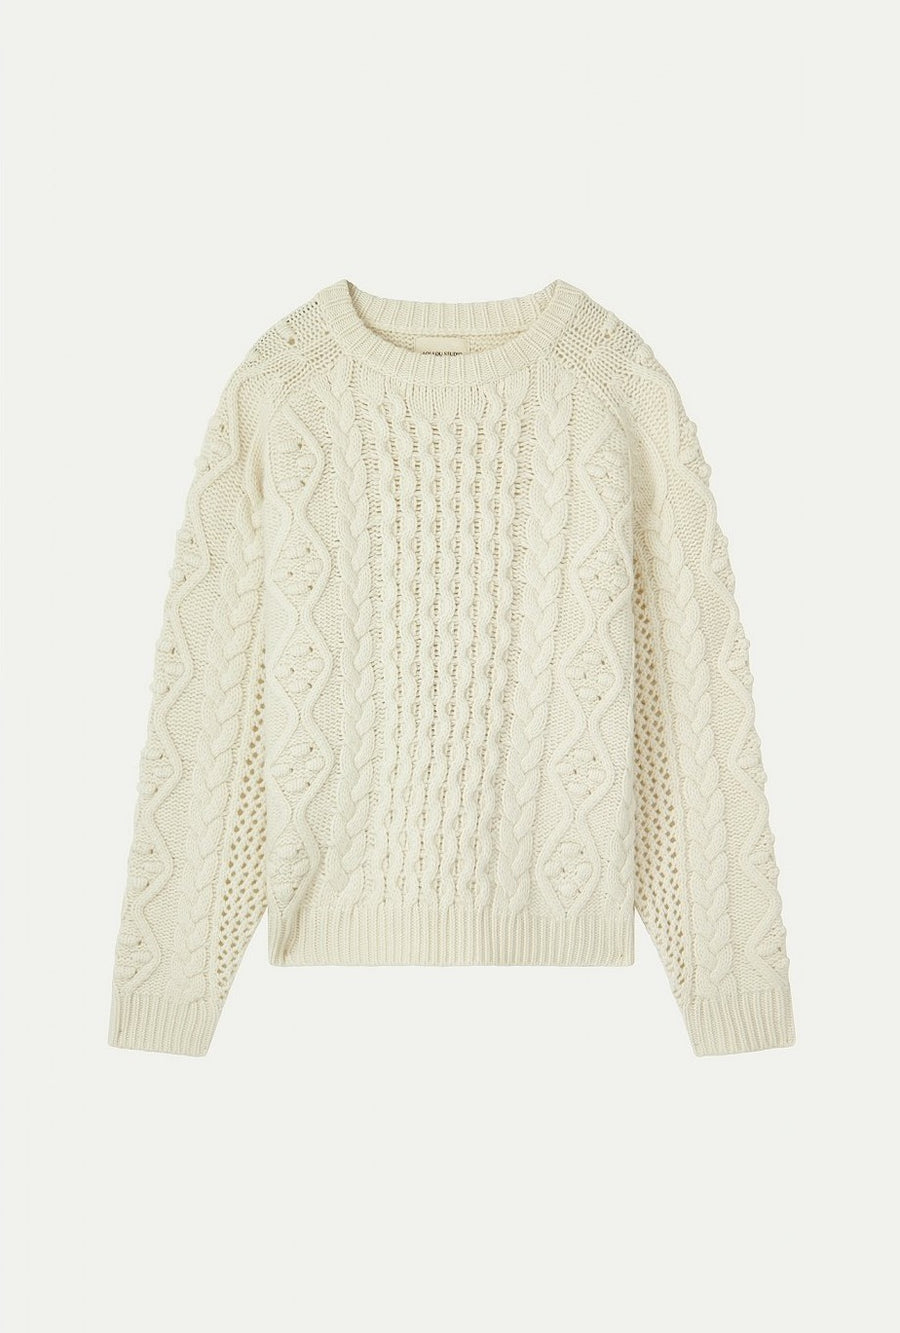 Secas Sweater - Ivory